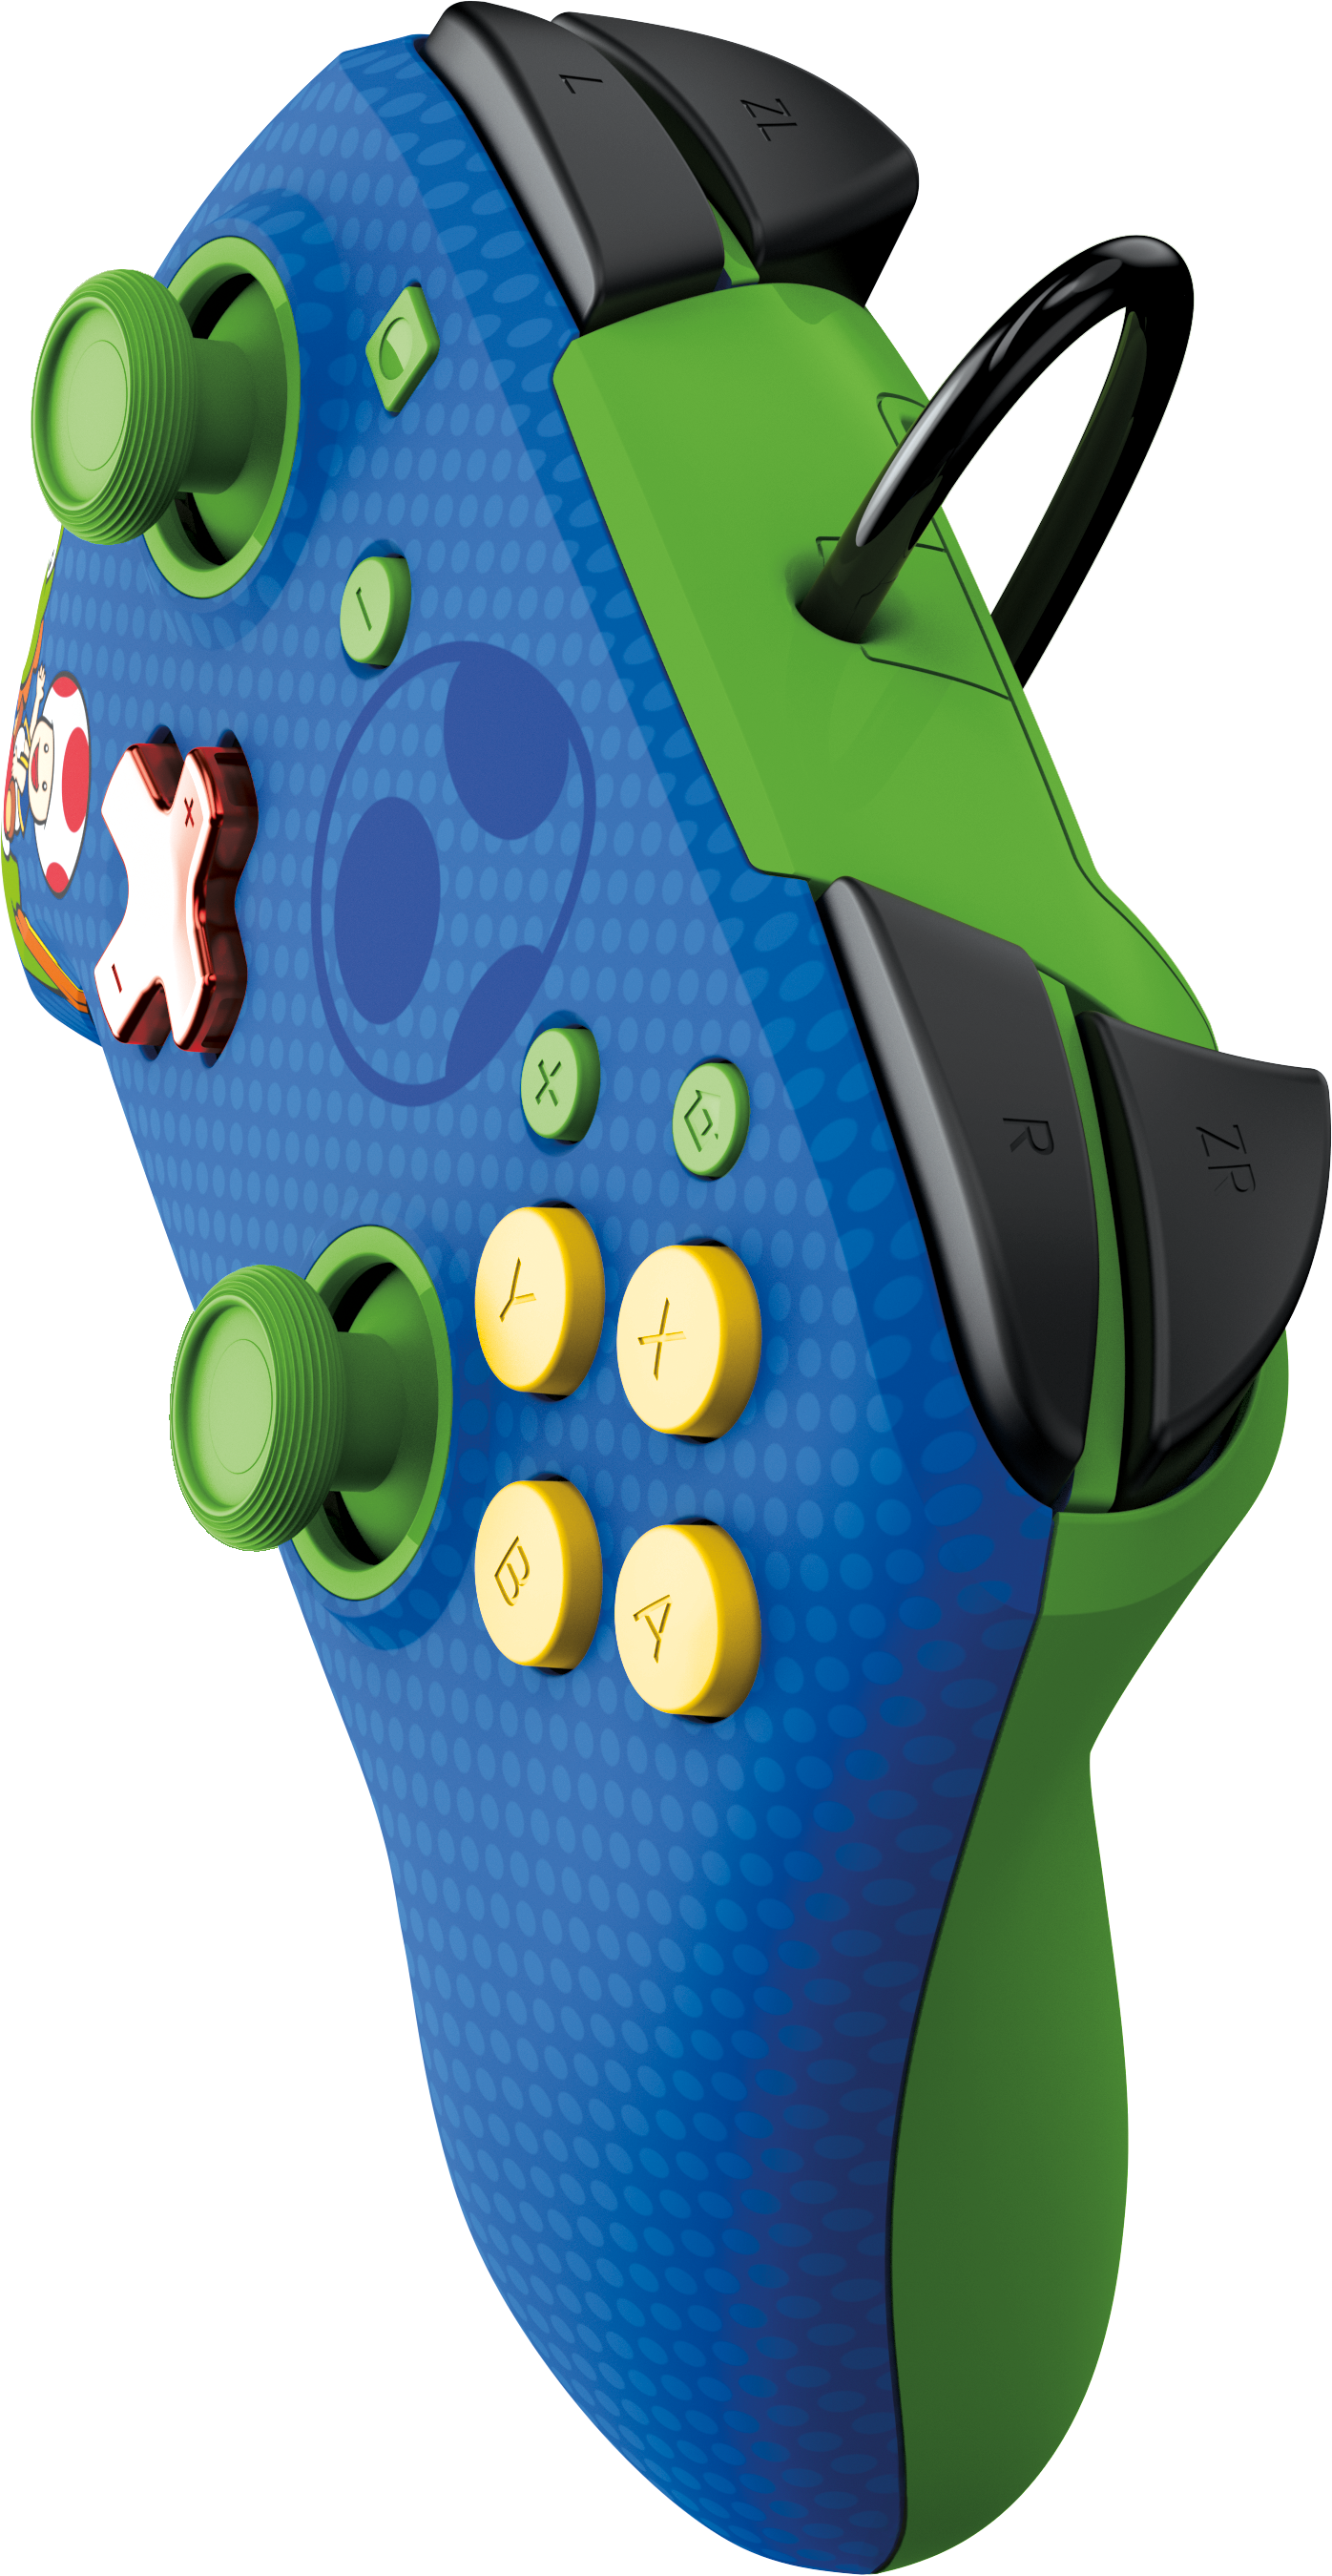 LLC OLED PDP Switch, Nintendo Controller REMATCH Toad & für Blau/Grün Switch Nintendo Kabelgebundener Yoshi